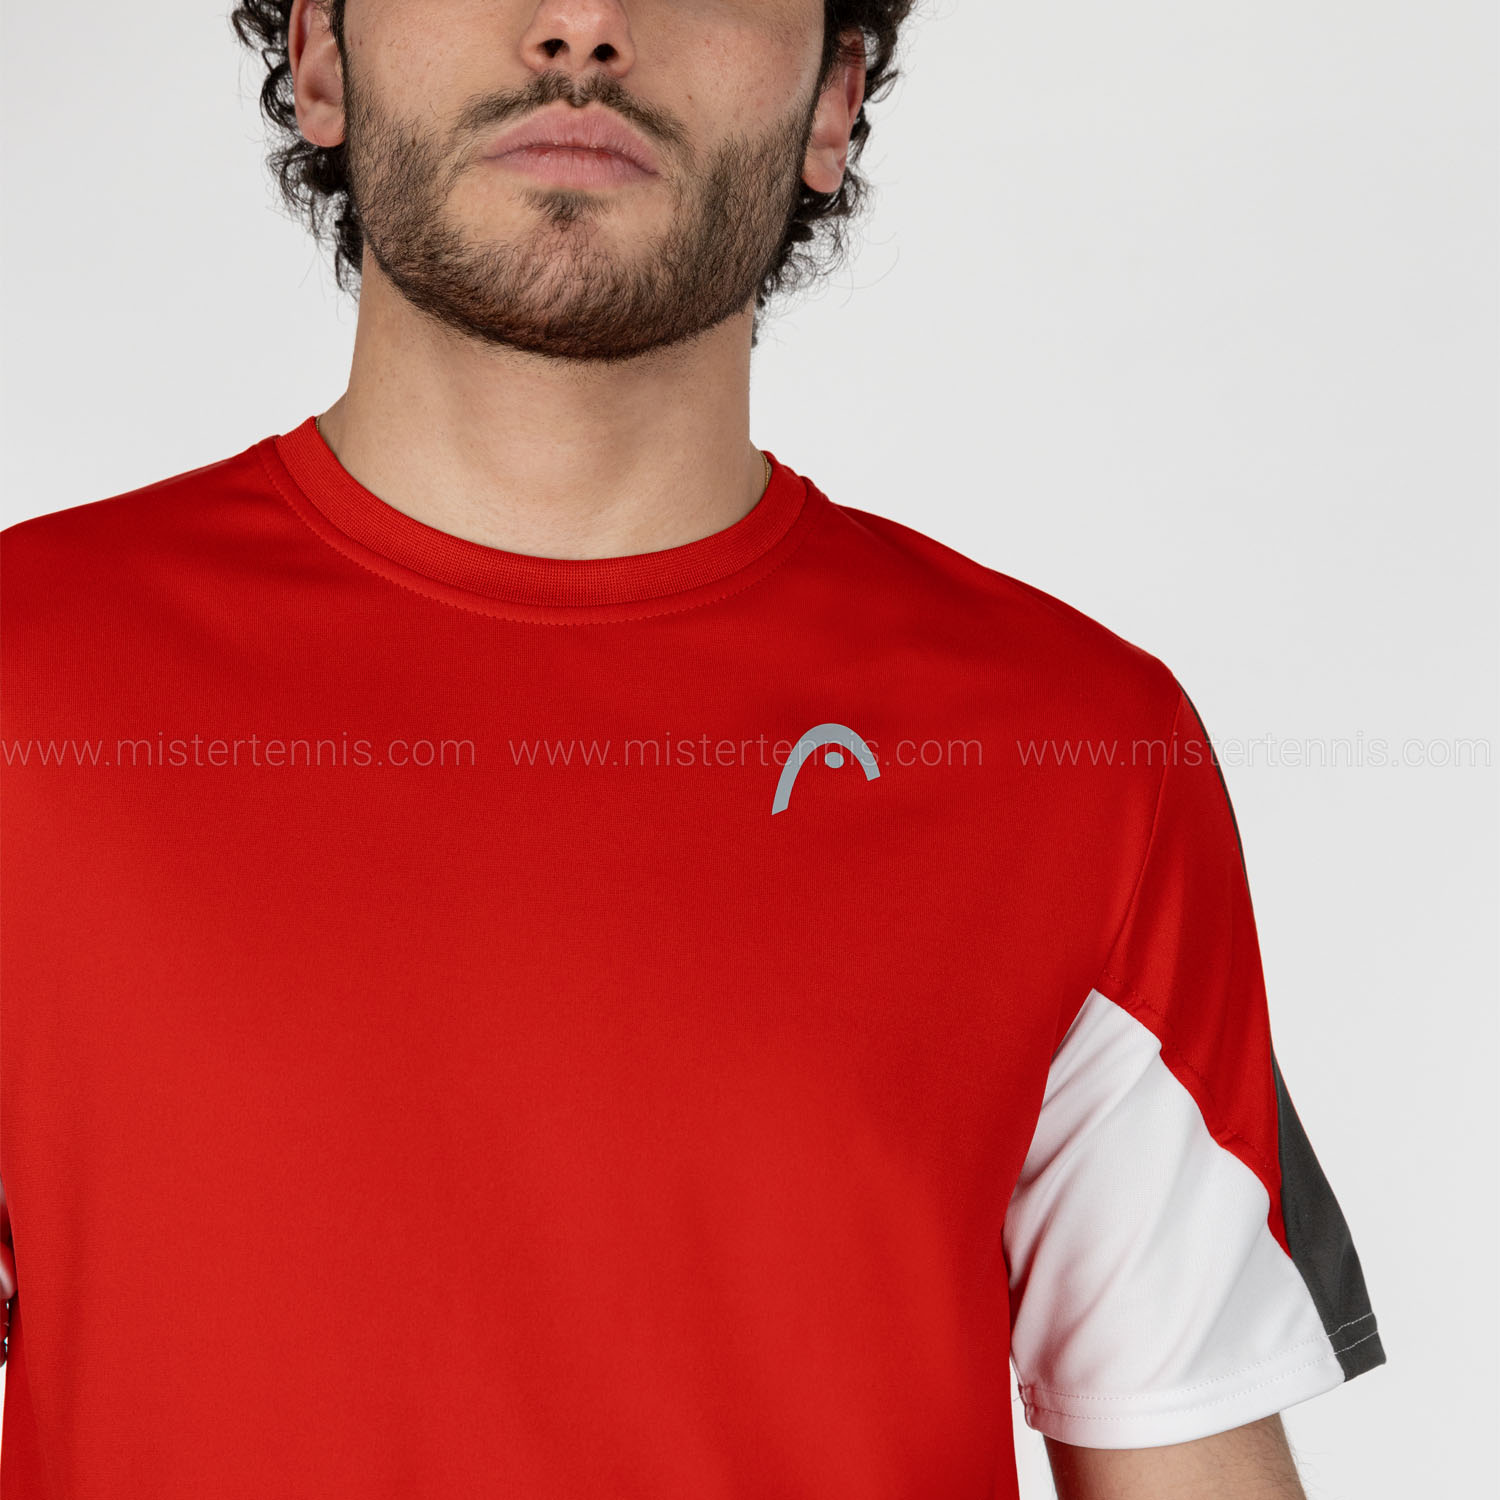 Head Club 22 Tech Camiseta - Red